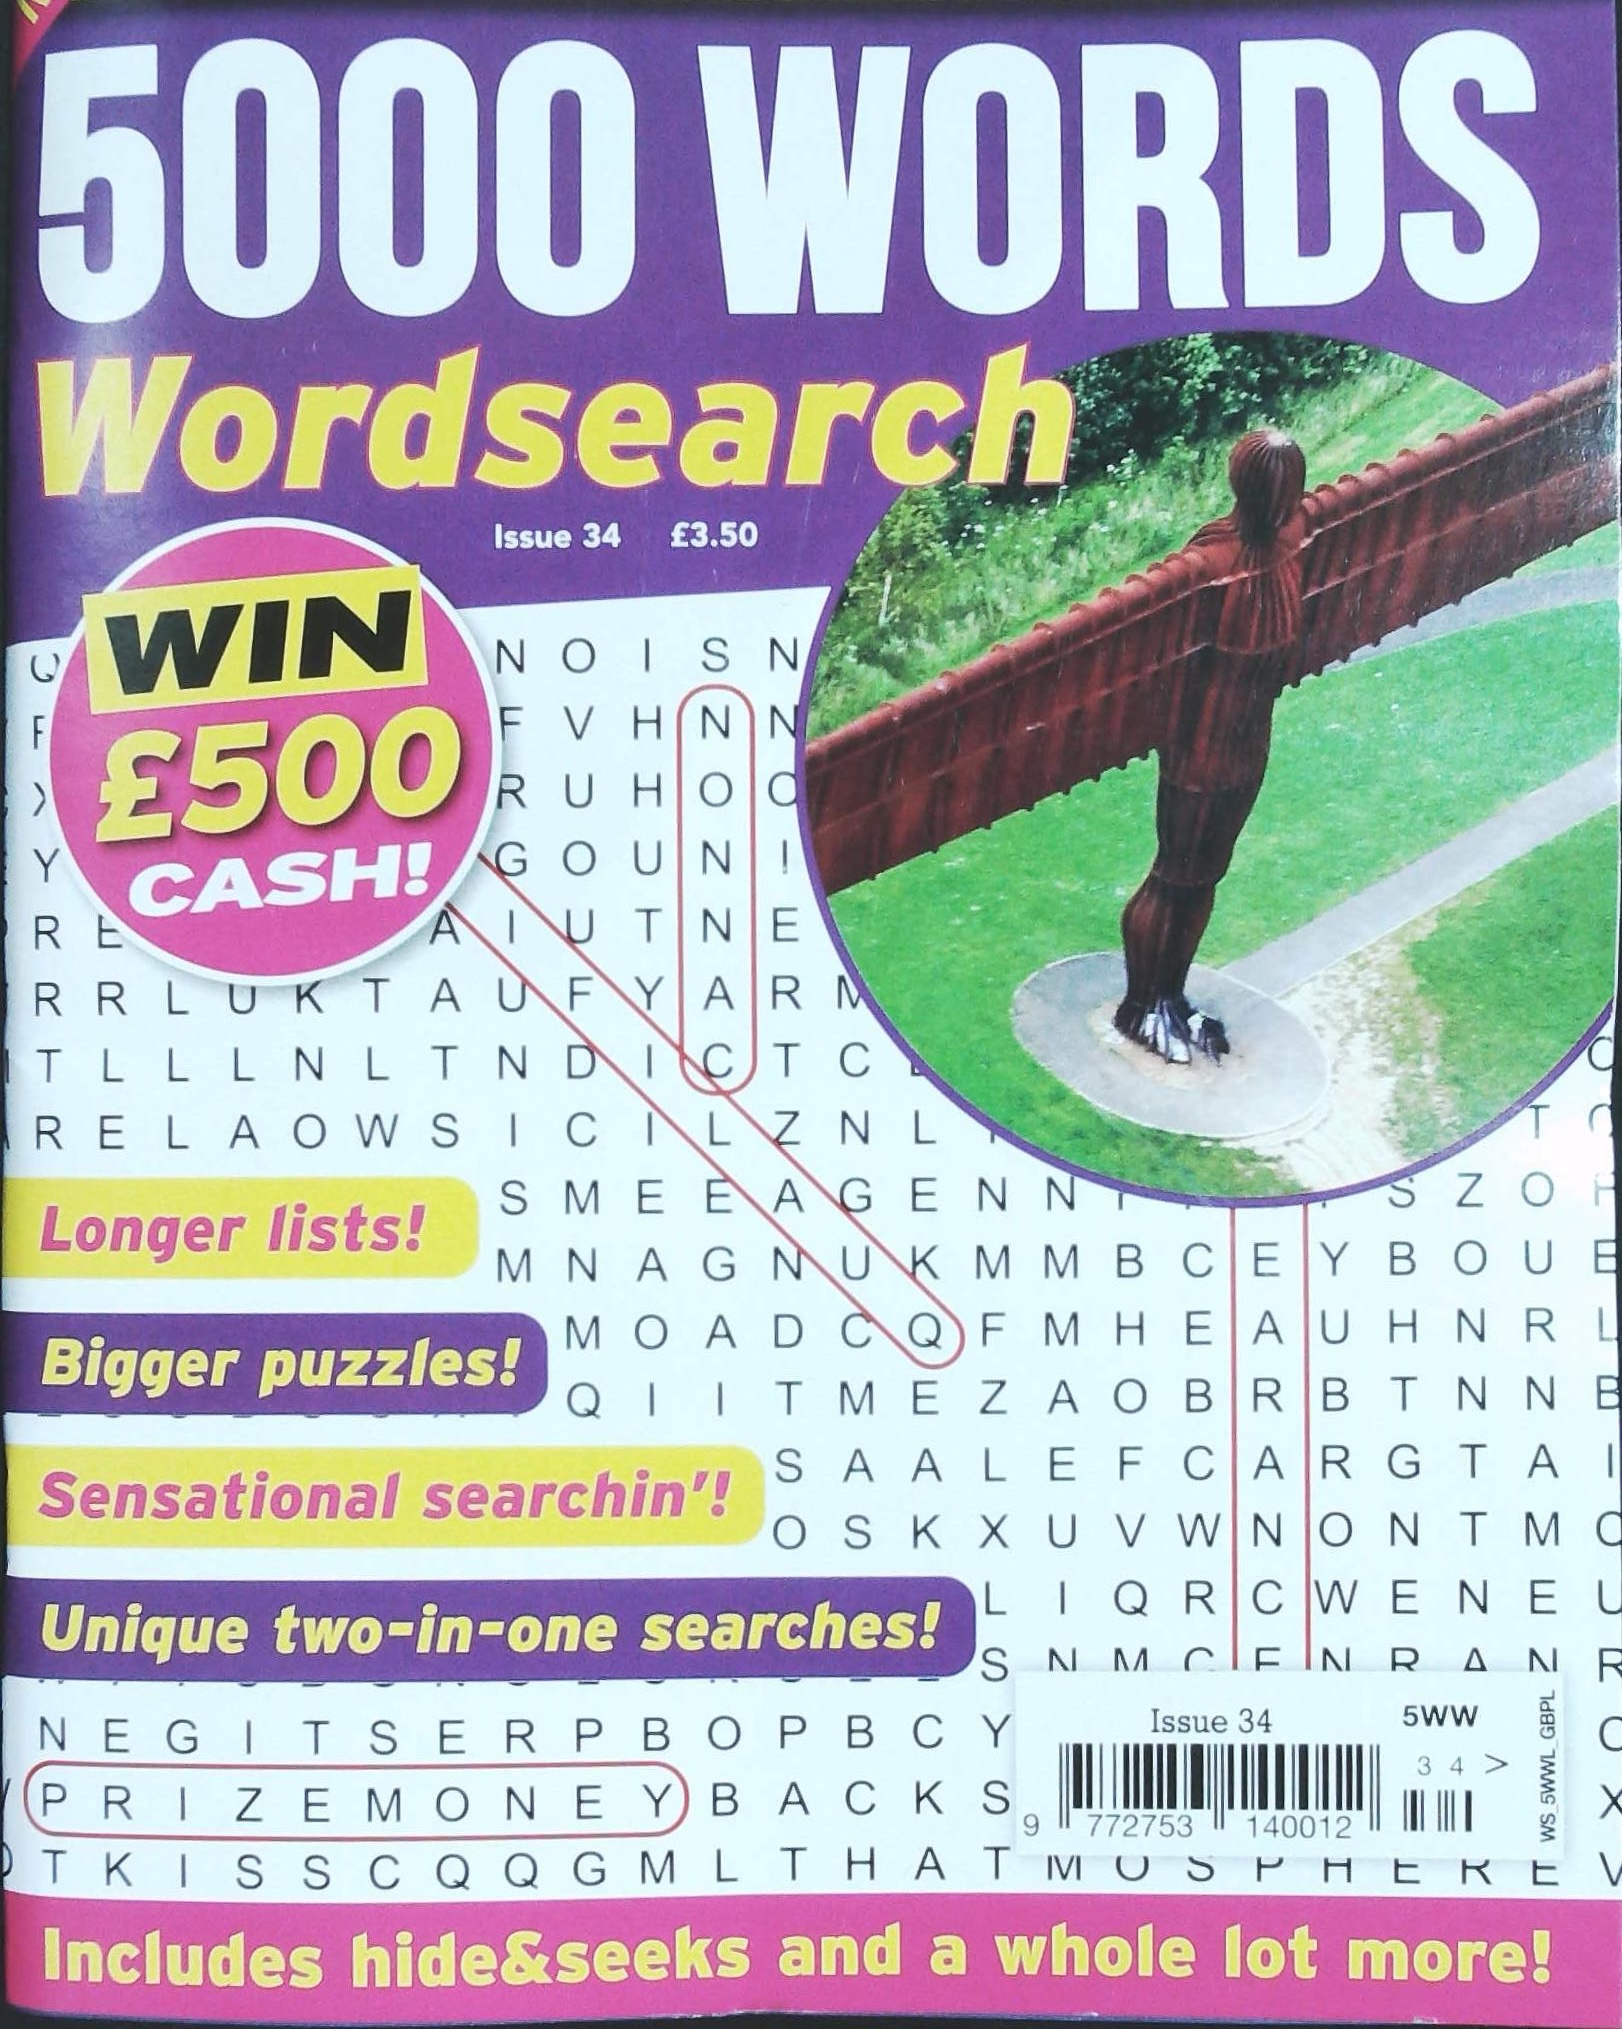 5000 WORDS